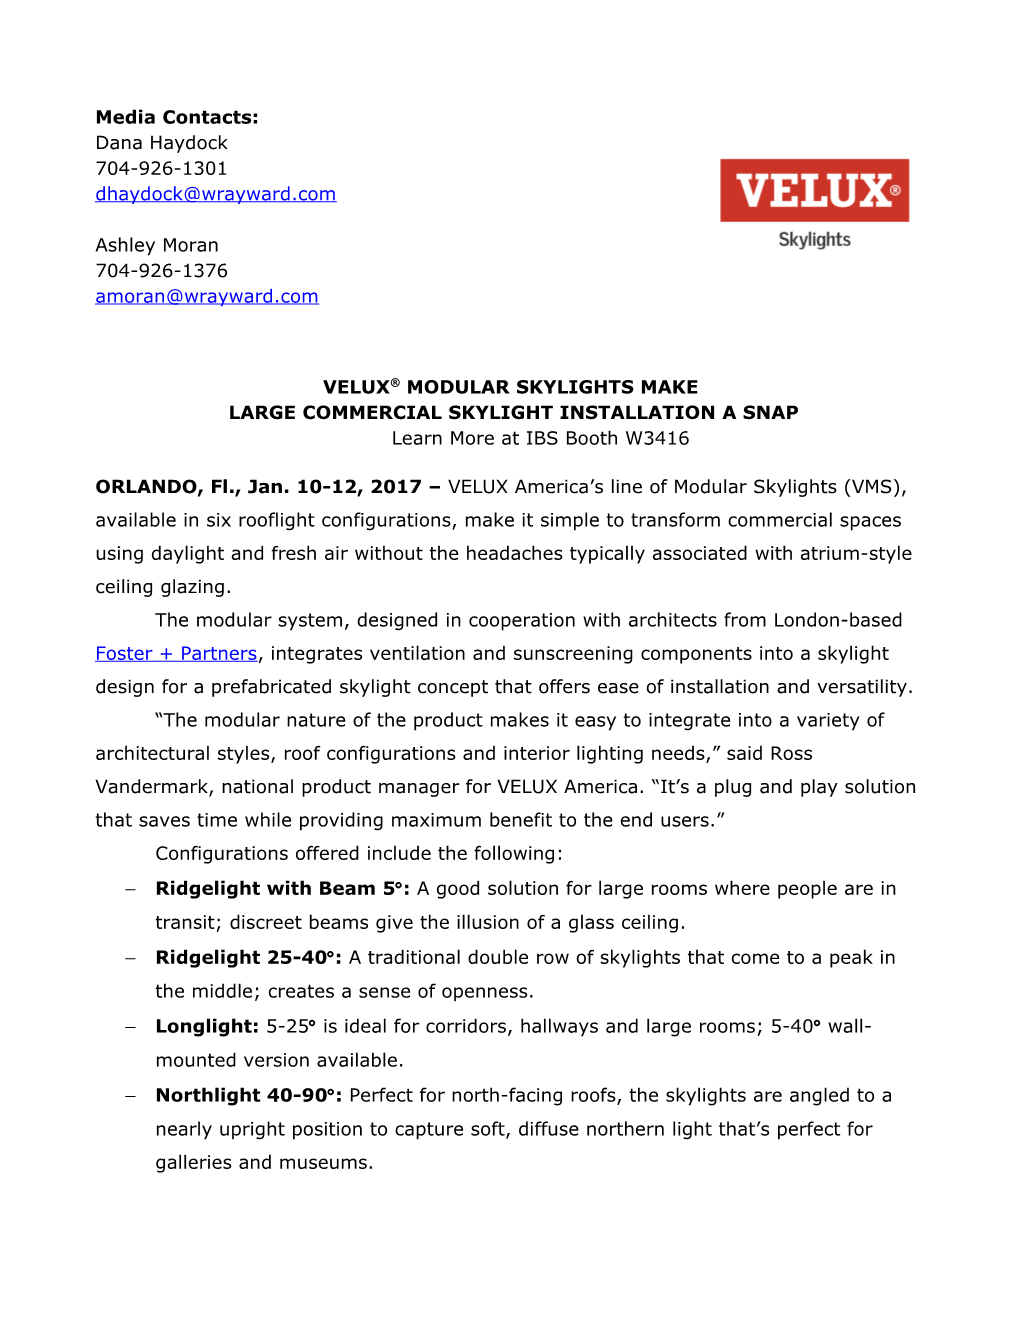 Velux Modular Skylights Make